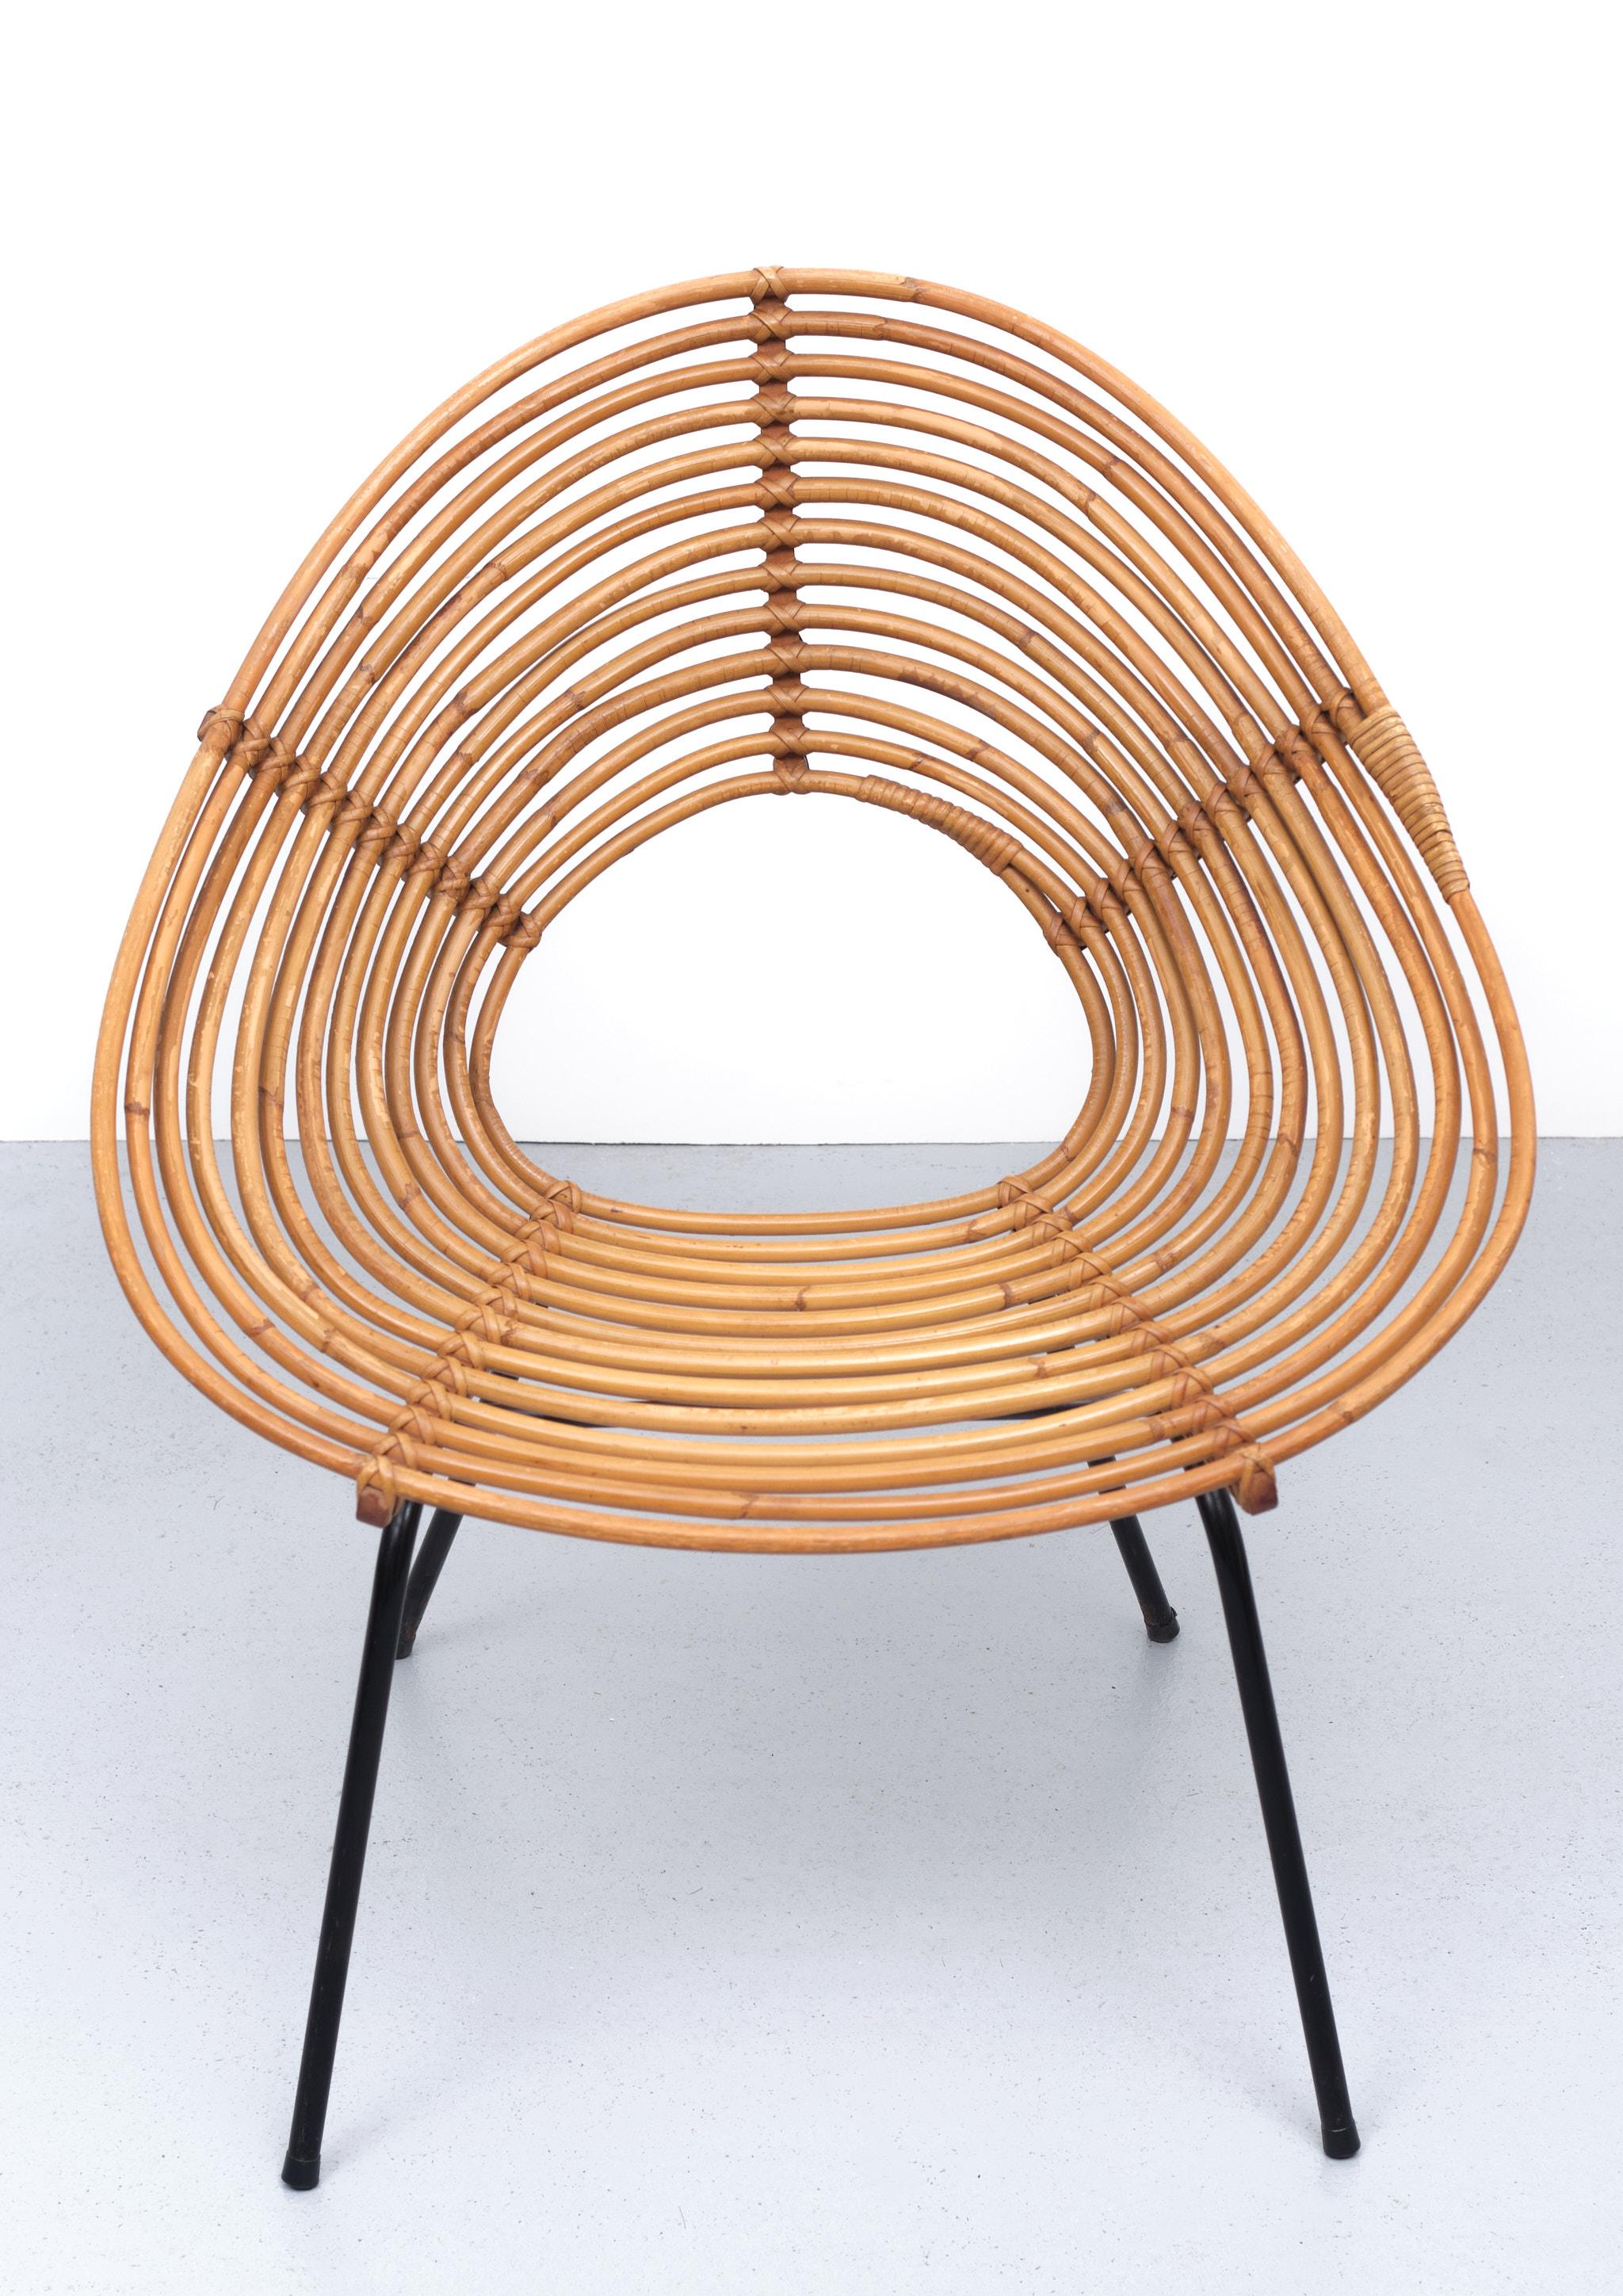 Mid-20th Century Rohe Noordwolde Dutch Wicker Chair 1950s